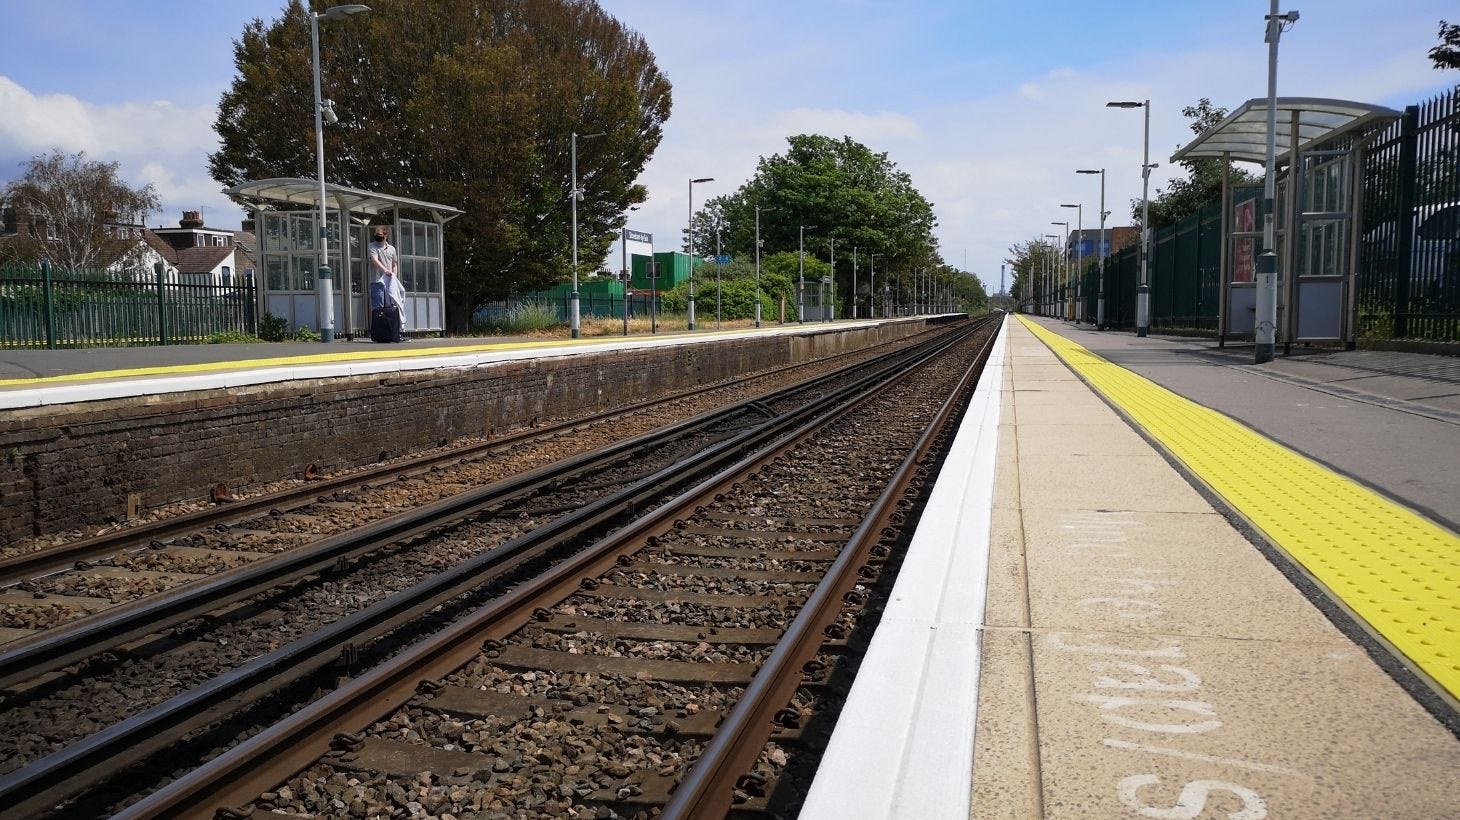 Platform edge at a station